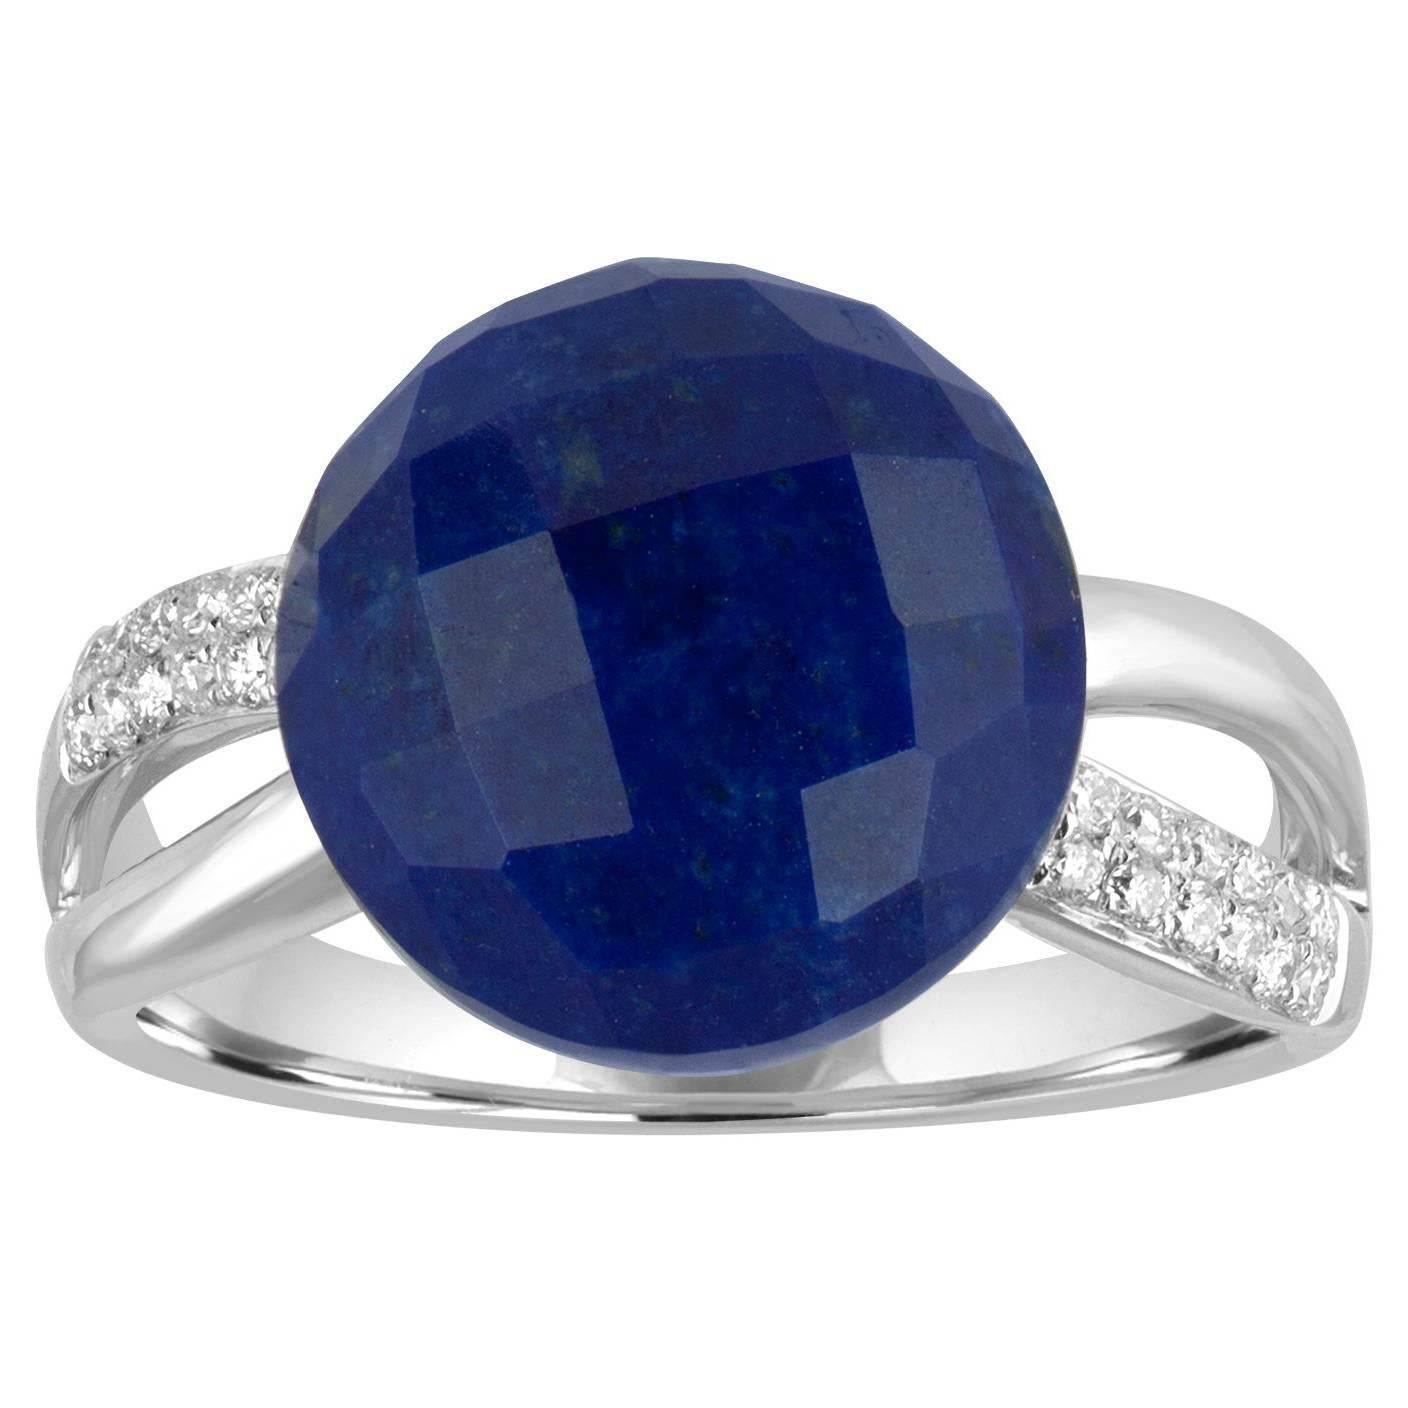 7.37 Carat Cabochon Lapis Lazuli Diamond Gold Ring